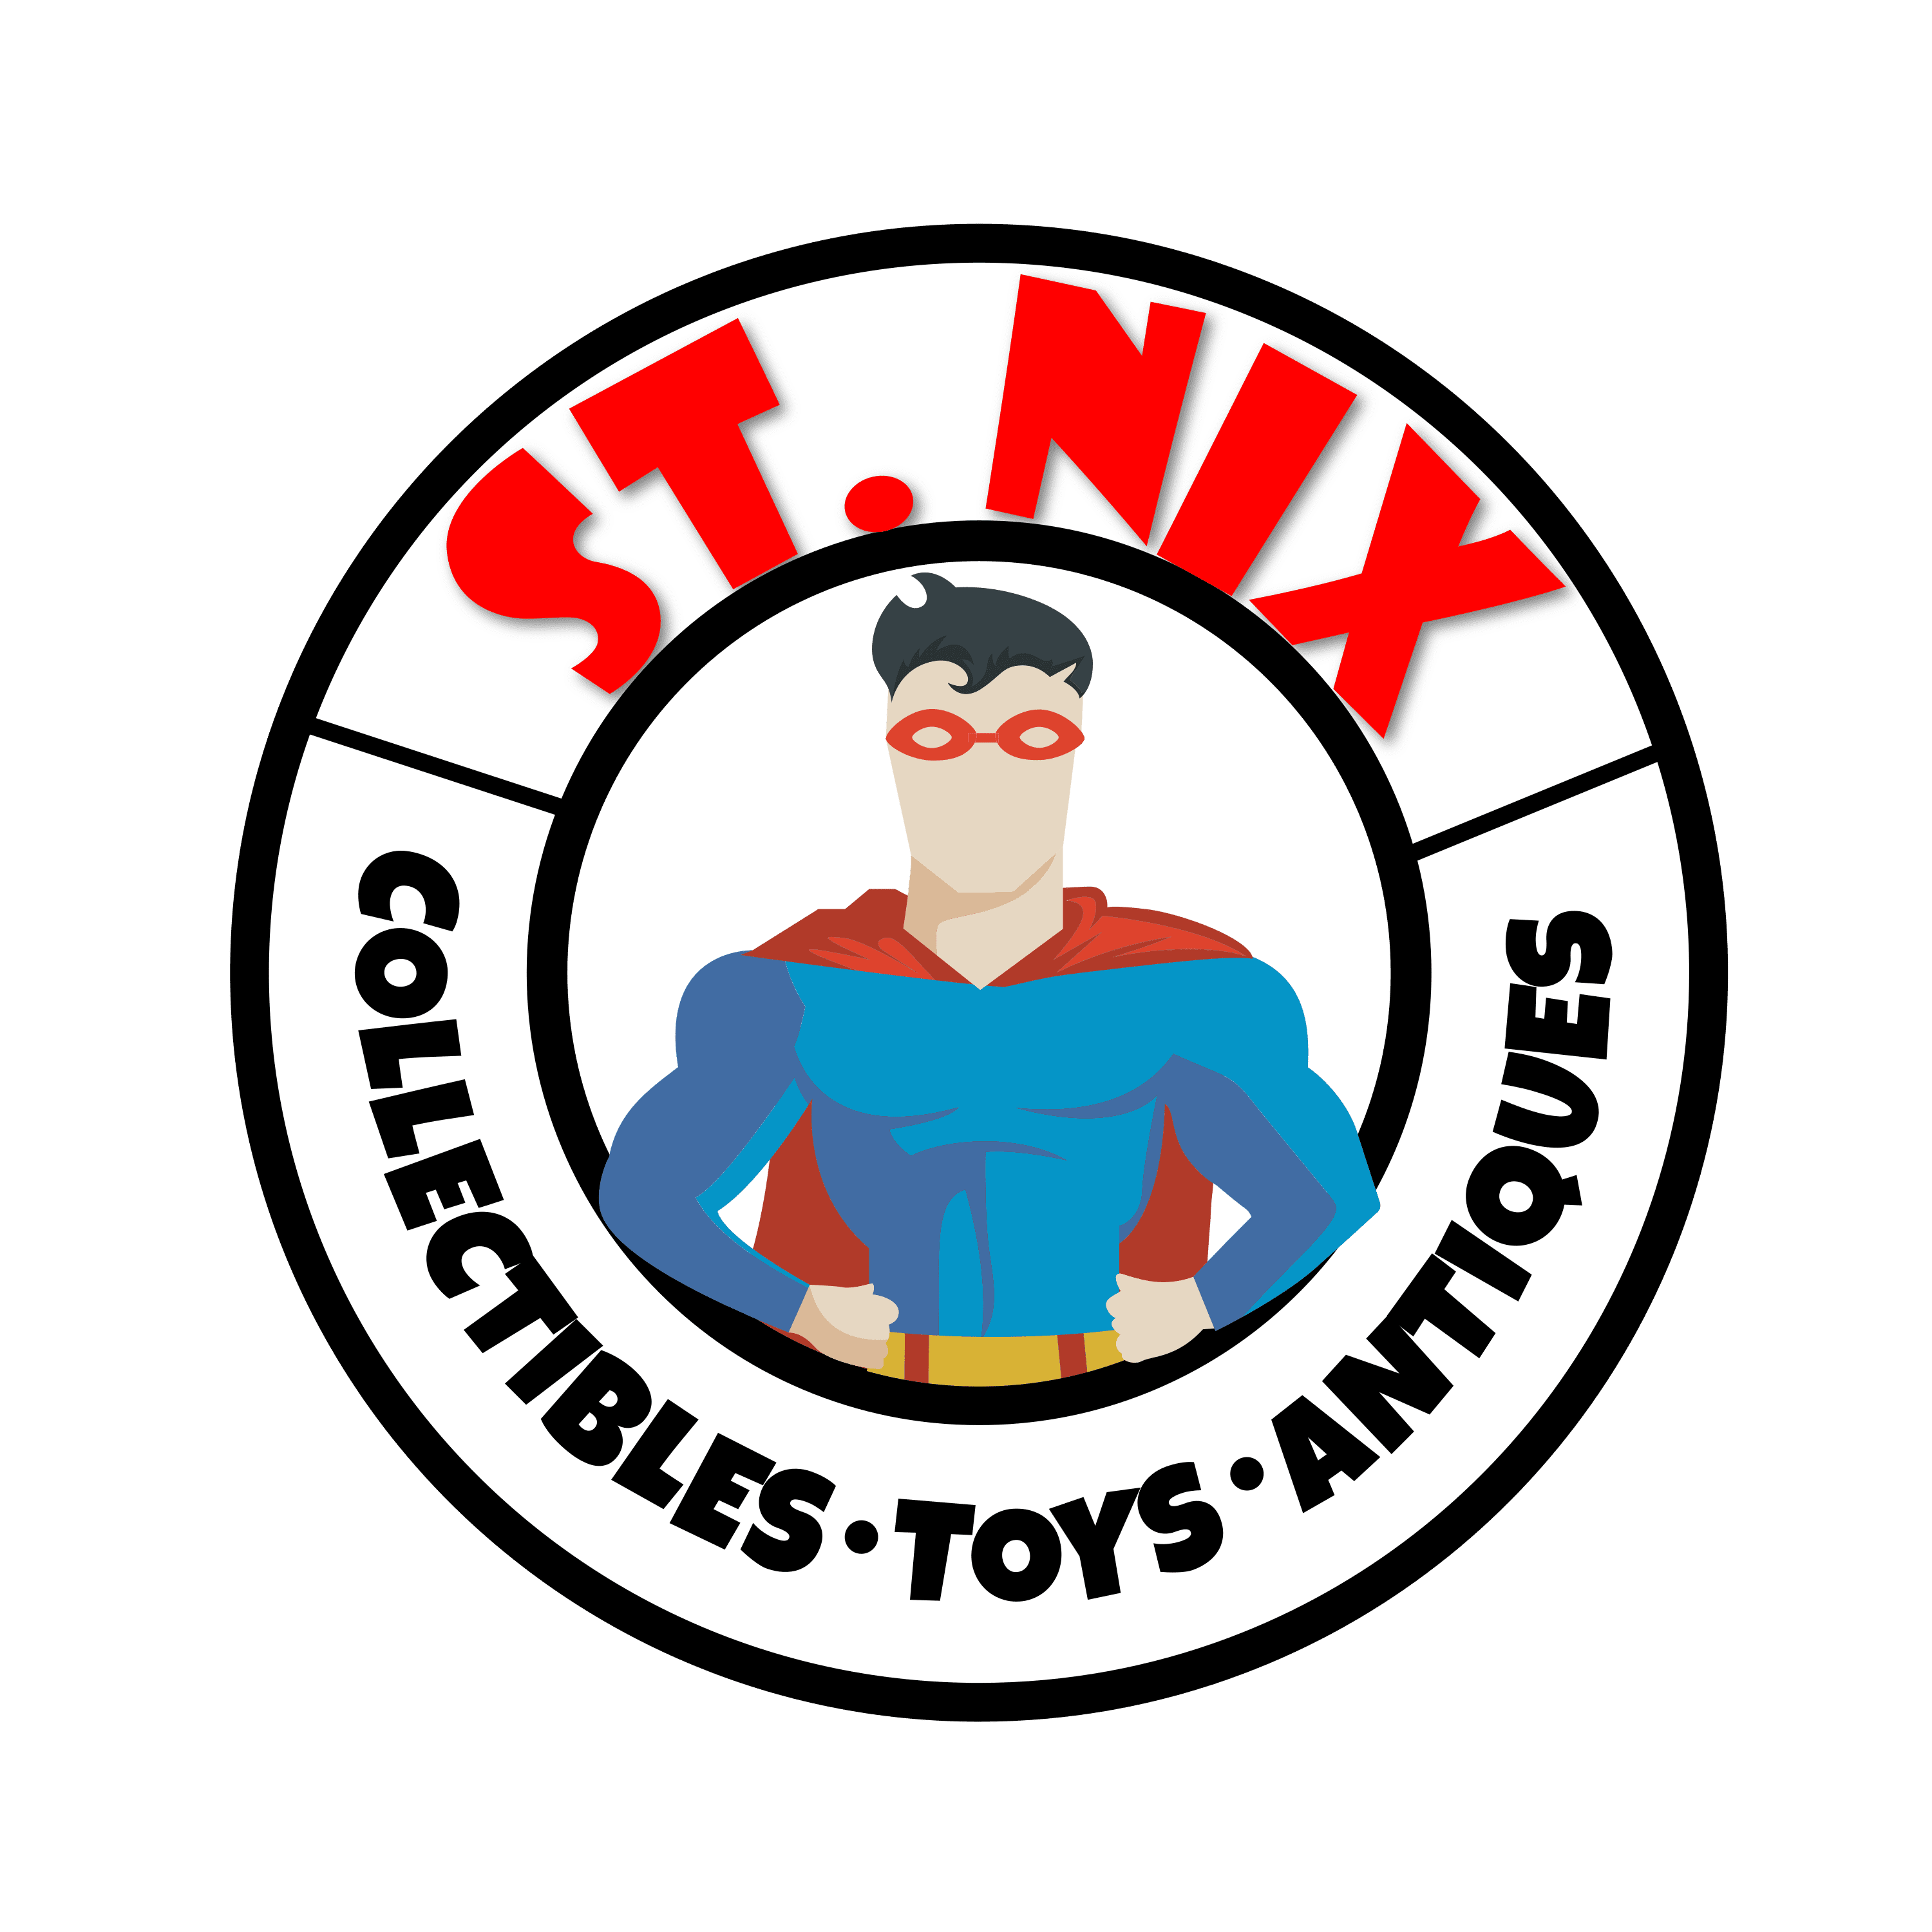 St. Nix Collectibles, Toys & Antiques